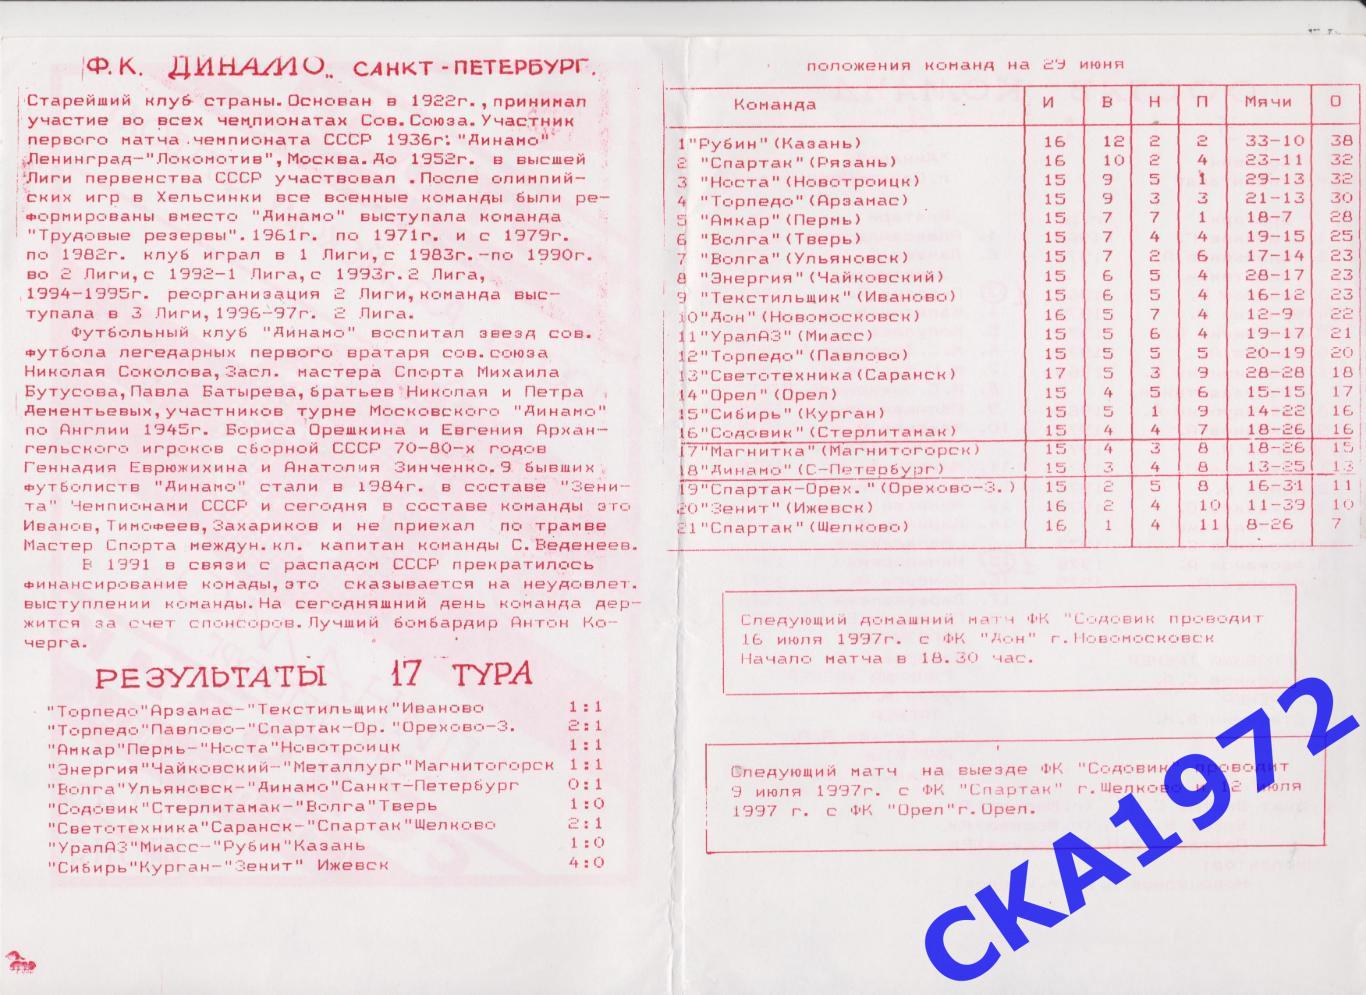 программа Содовик Стерлитамак - Динамо Санкт-Петербург 1997 копия 1